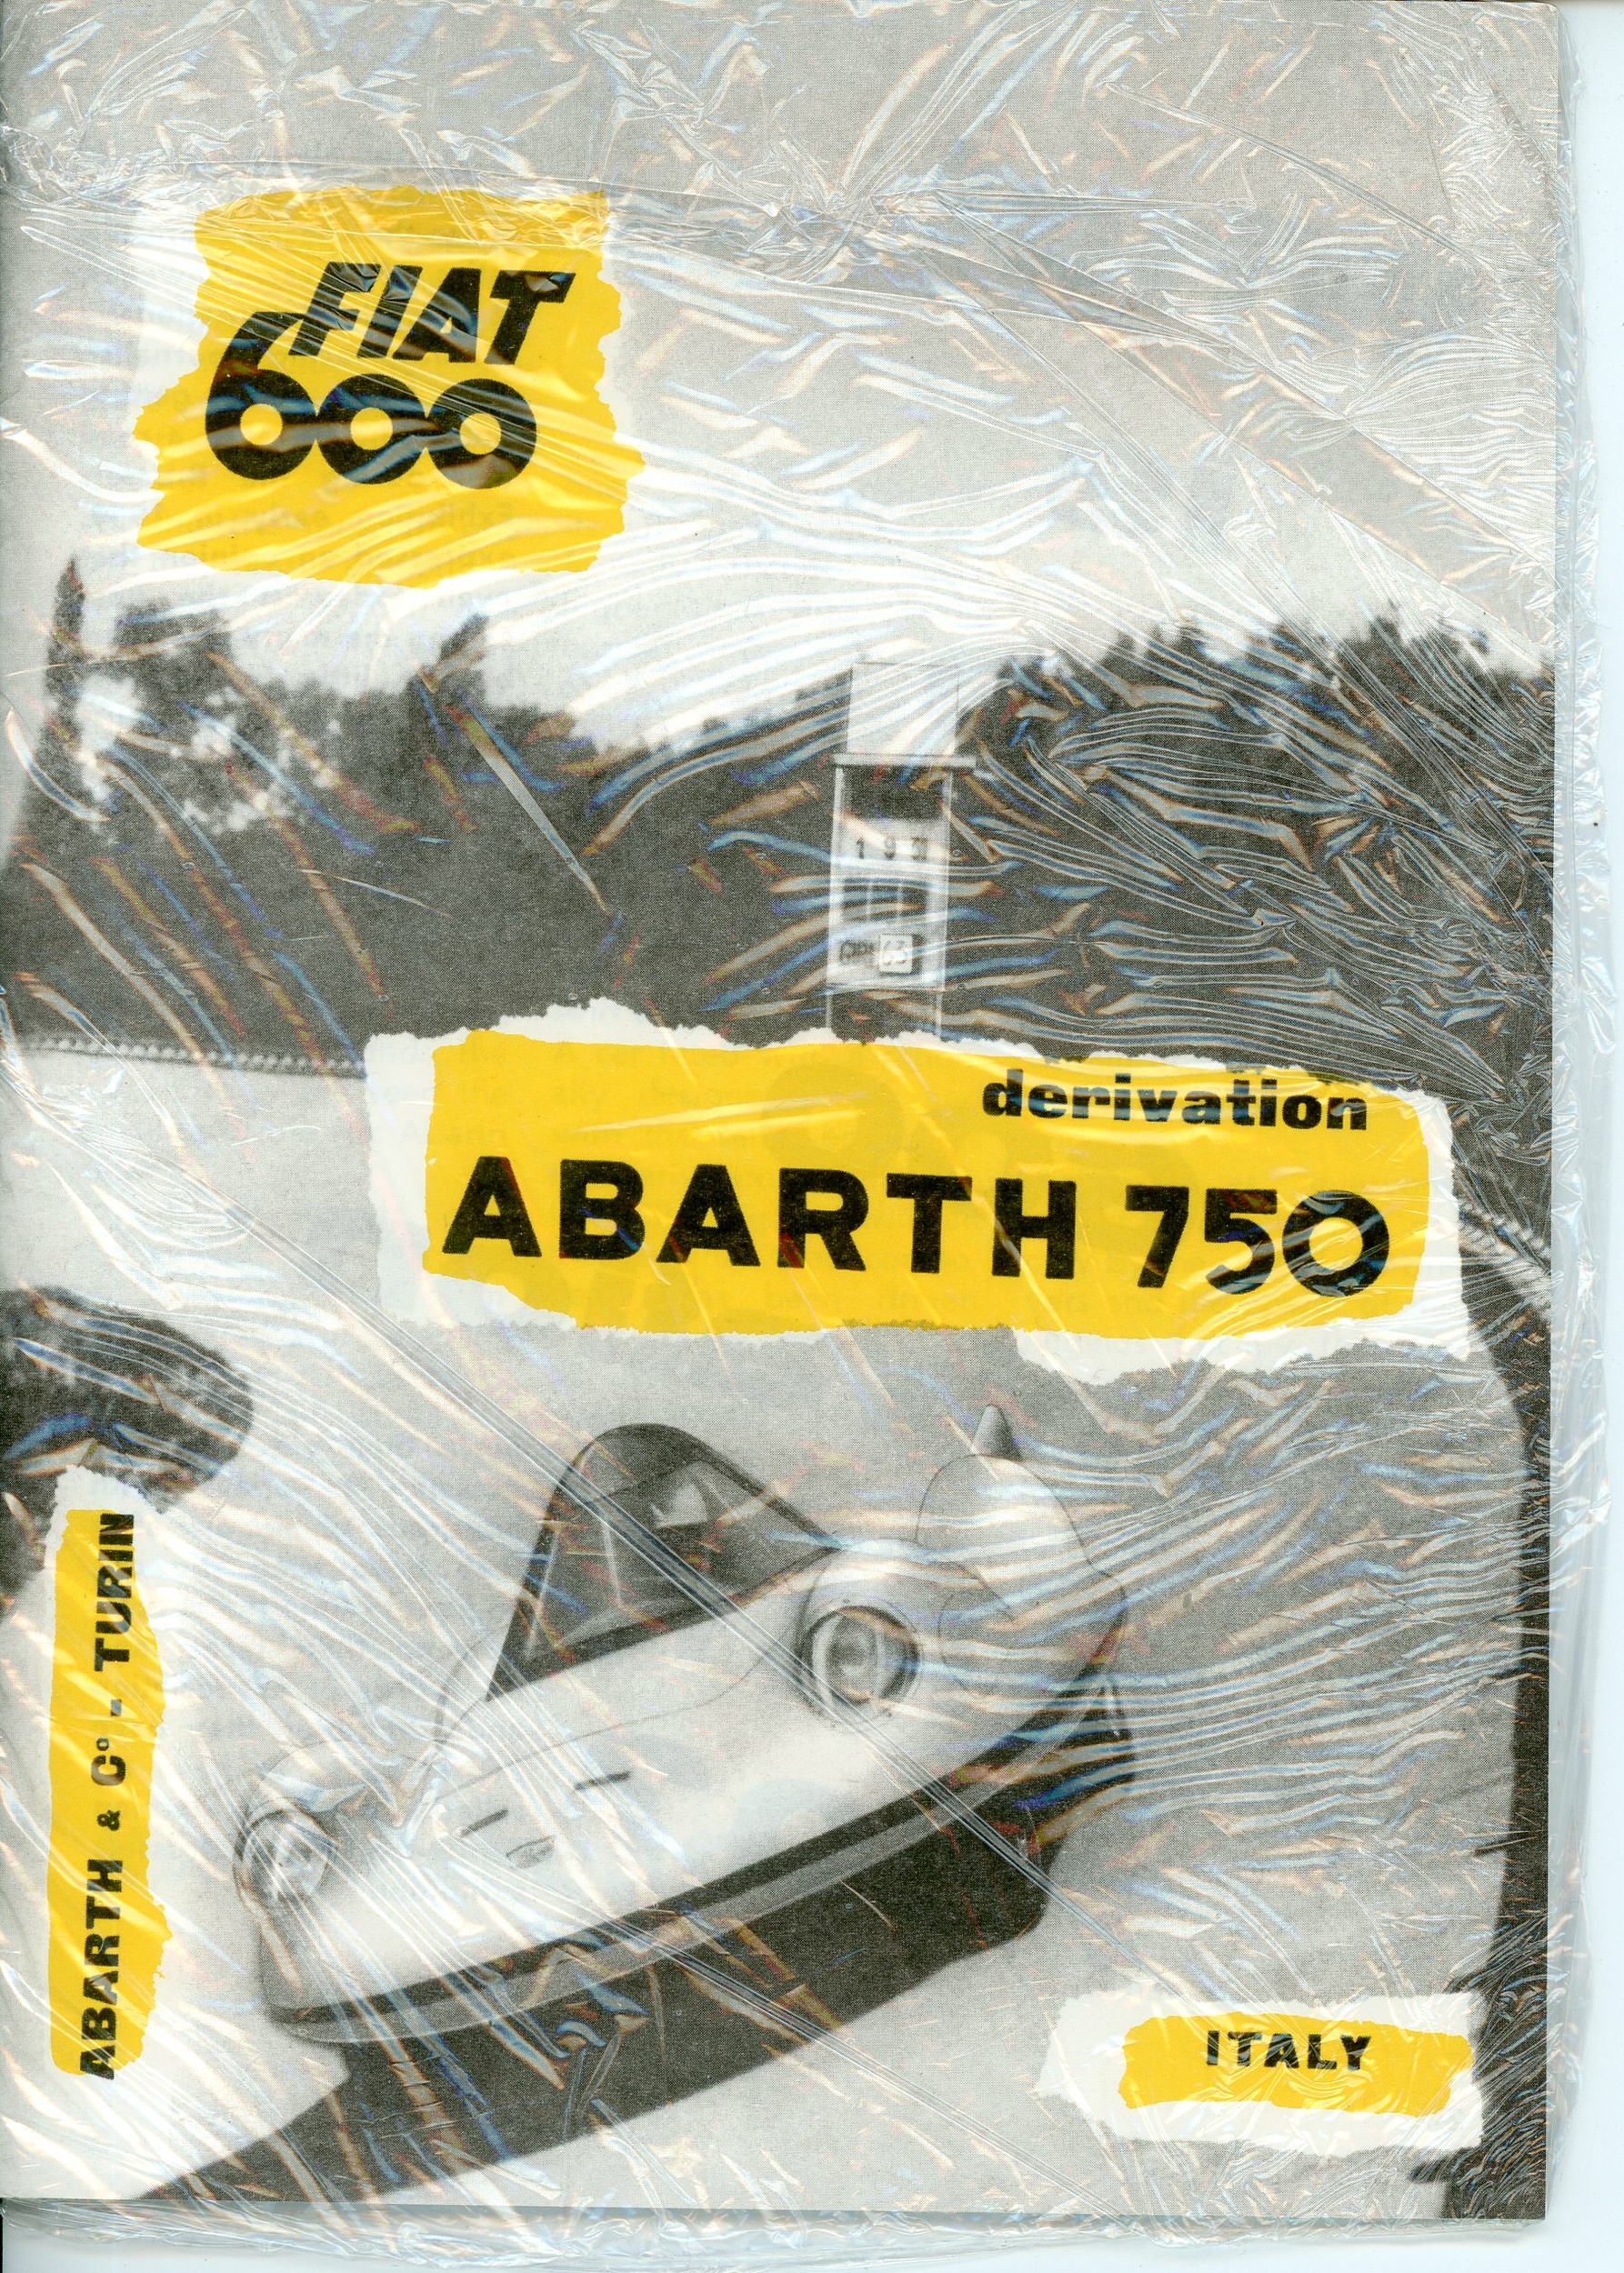 FIAT 600 DERIVATION ABARTH 750 - ABARTH & C - TURIN